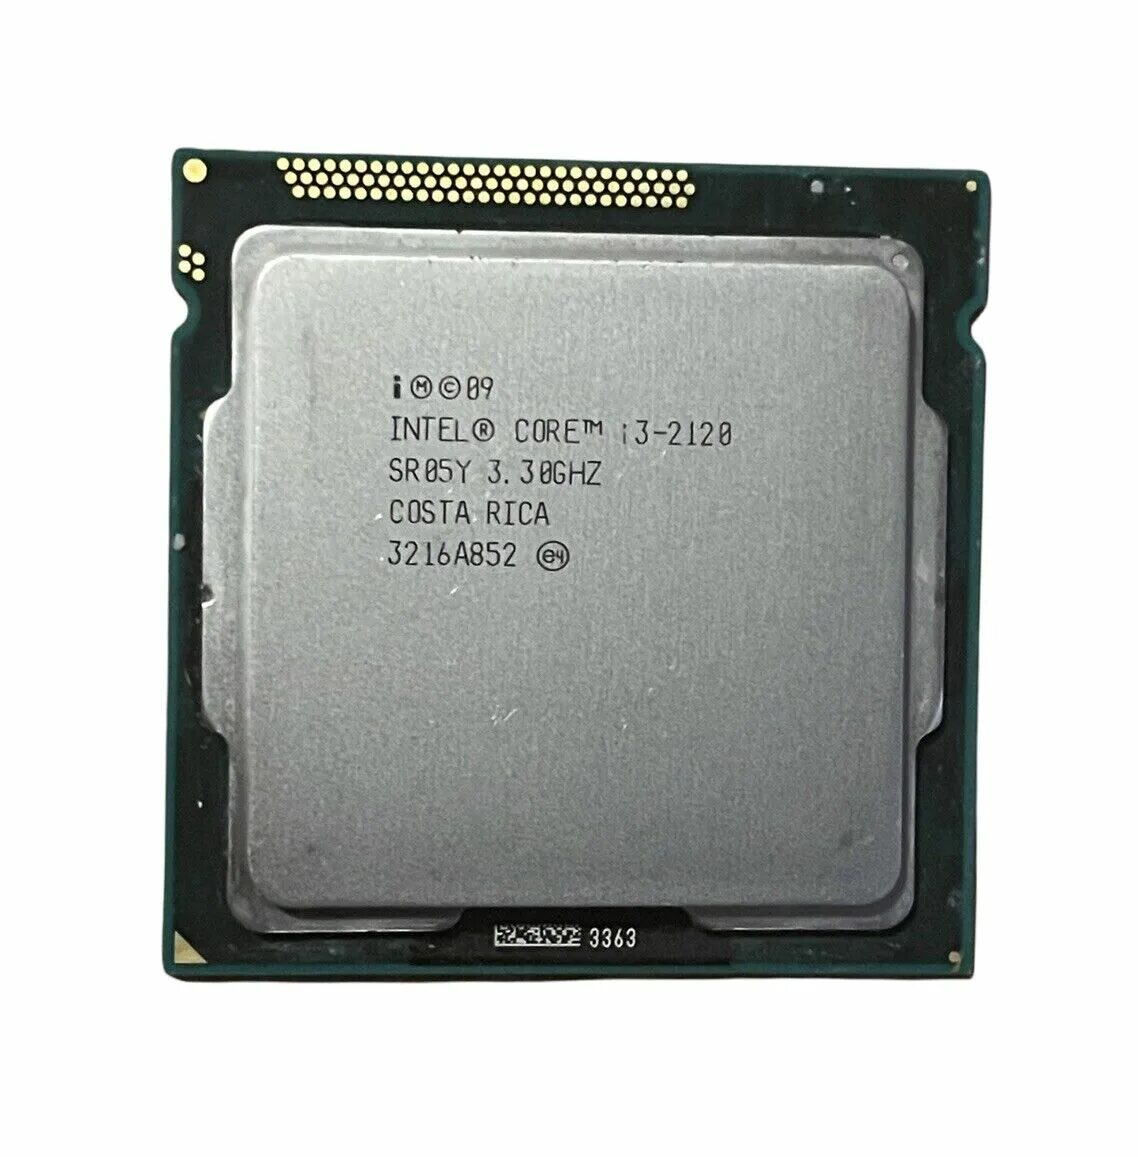 Intel i3 2120. Intel Core i3 2120. Intel Core TM i3 2120 CPU 3.30GHZ. Intel(r) Core(TM) i3-2120 CPU @ 3.30GHZ 3.30 GHZ.